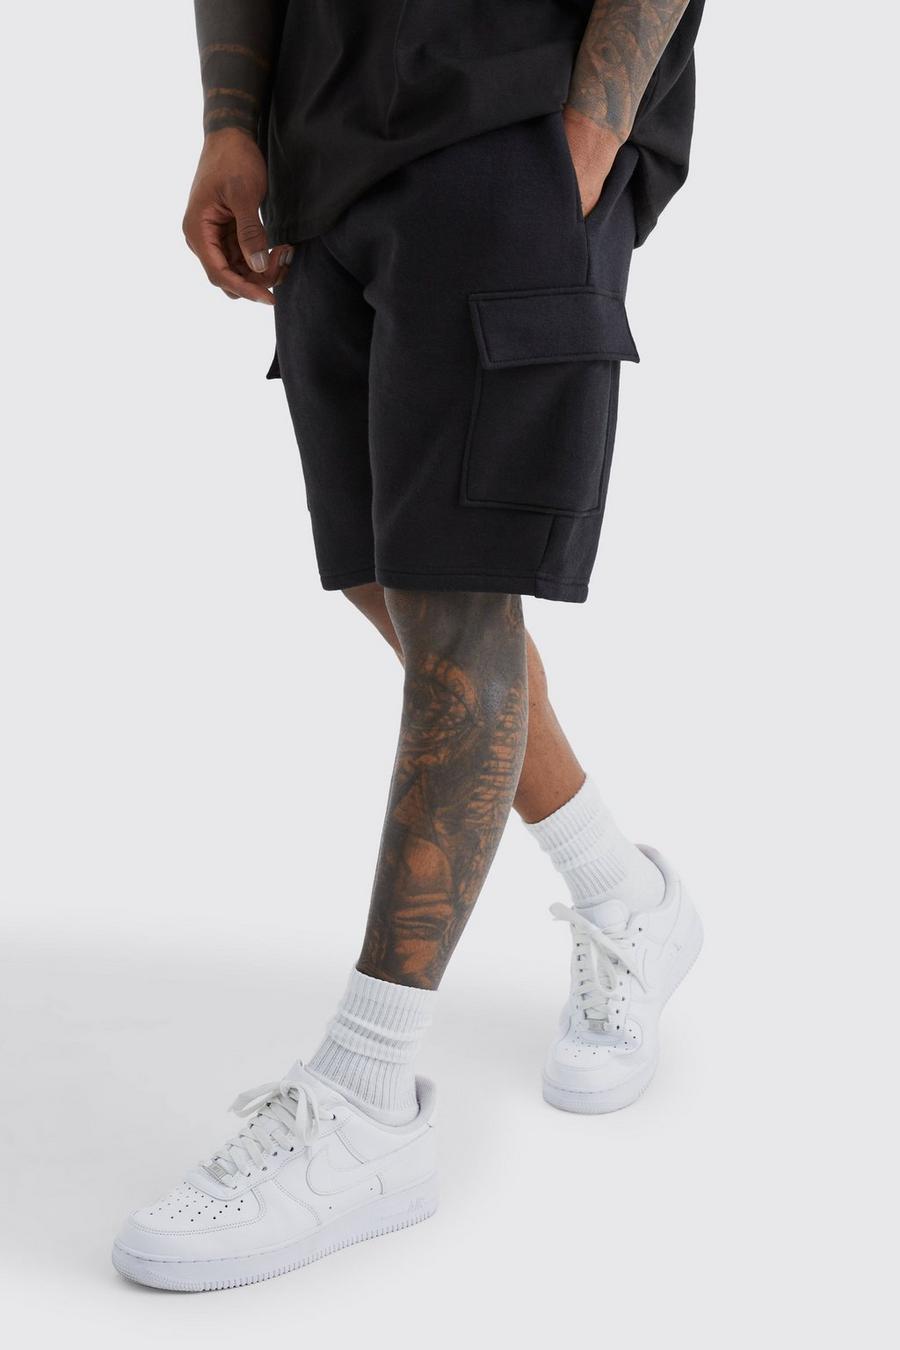 ASOS DESIGN slim jersey shorts in black